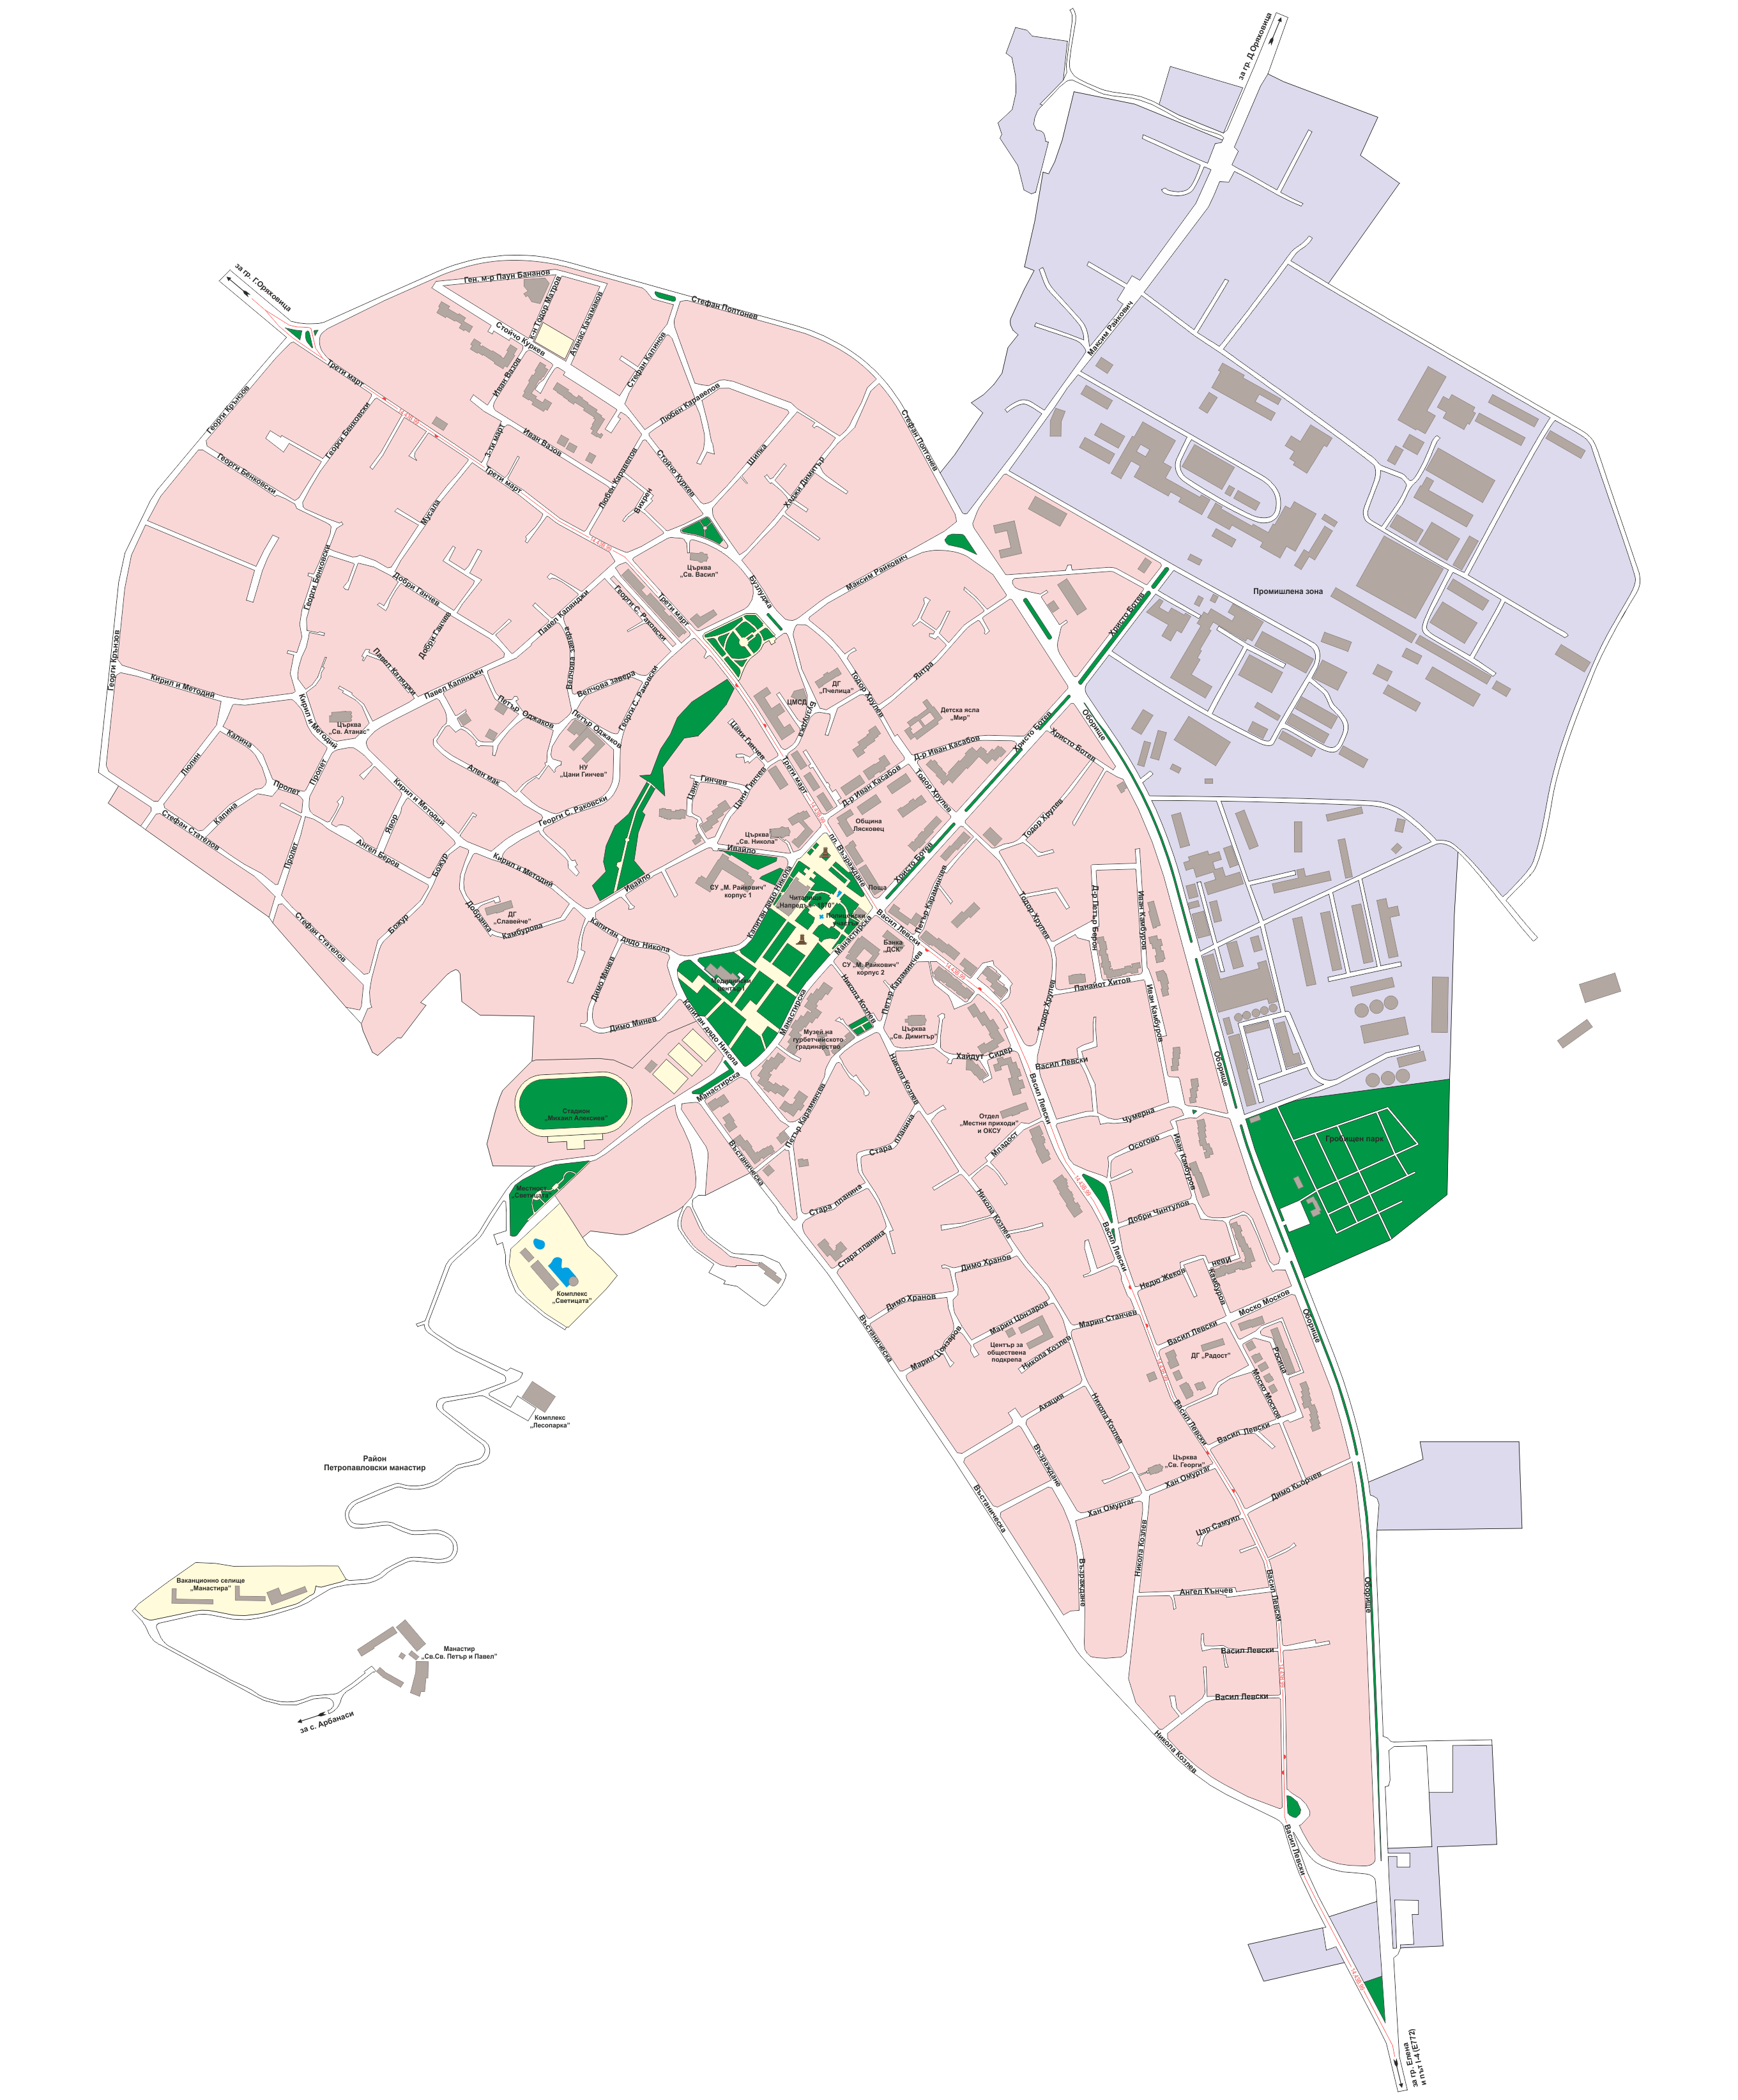 Карта града гисметео